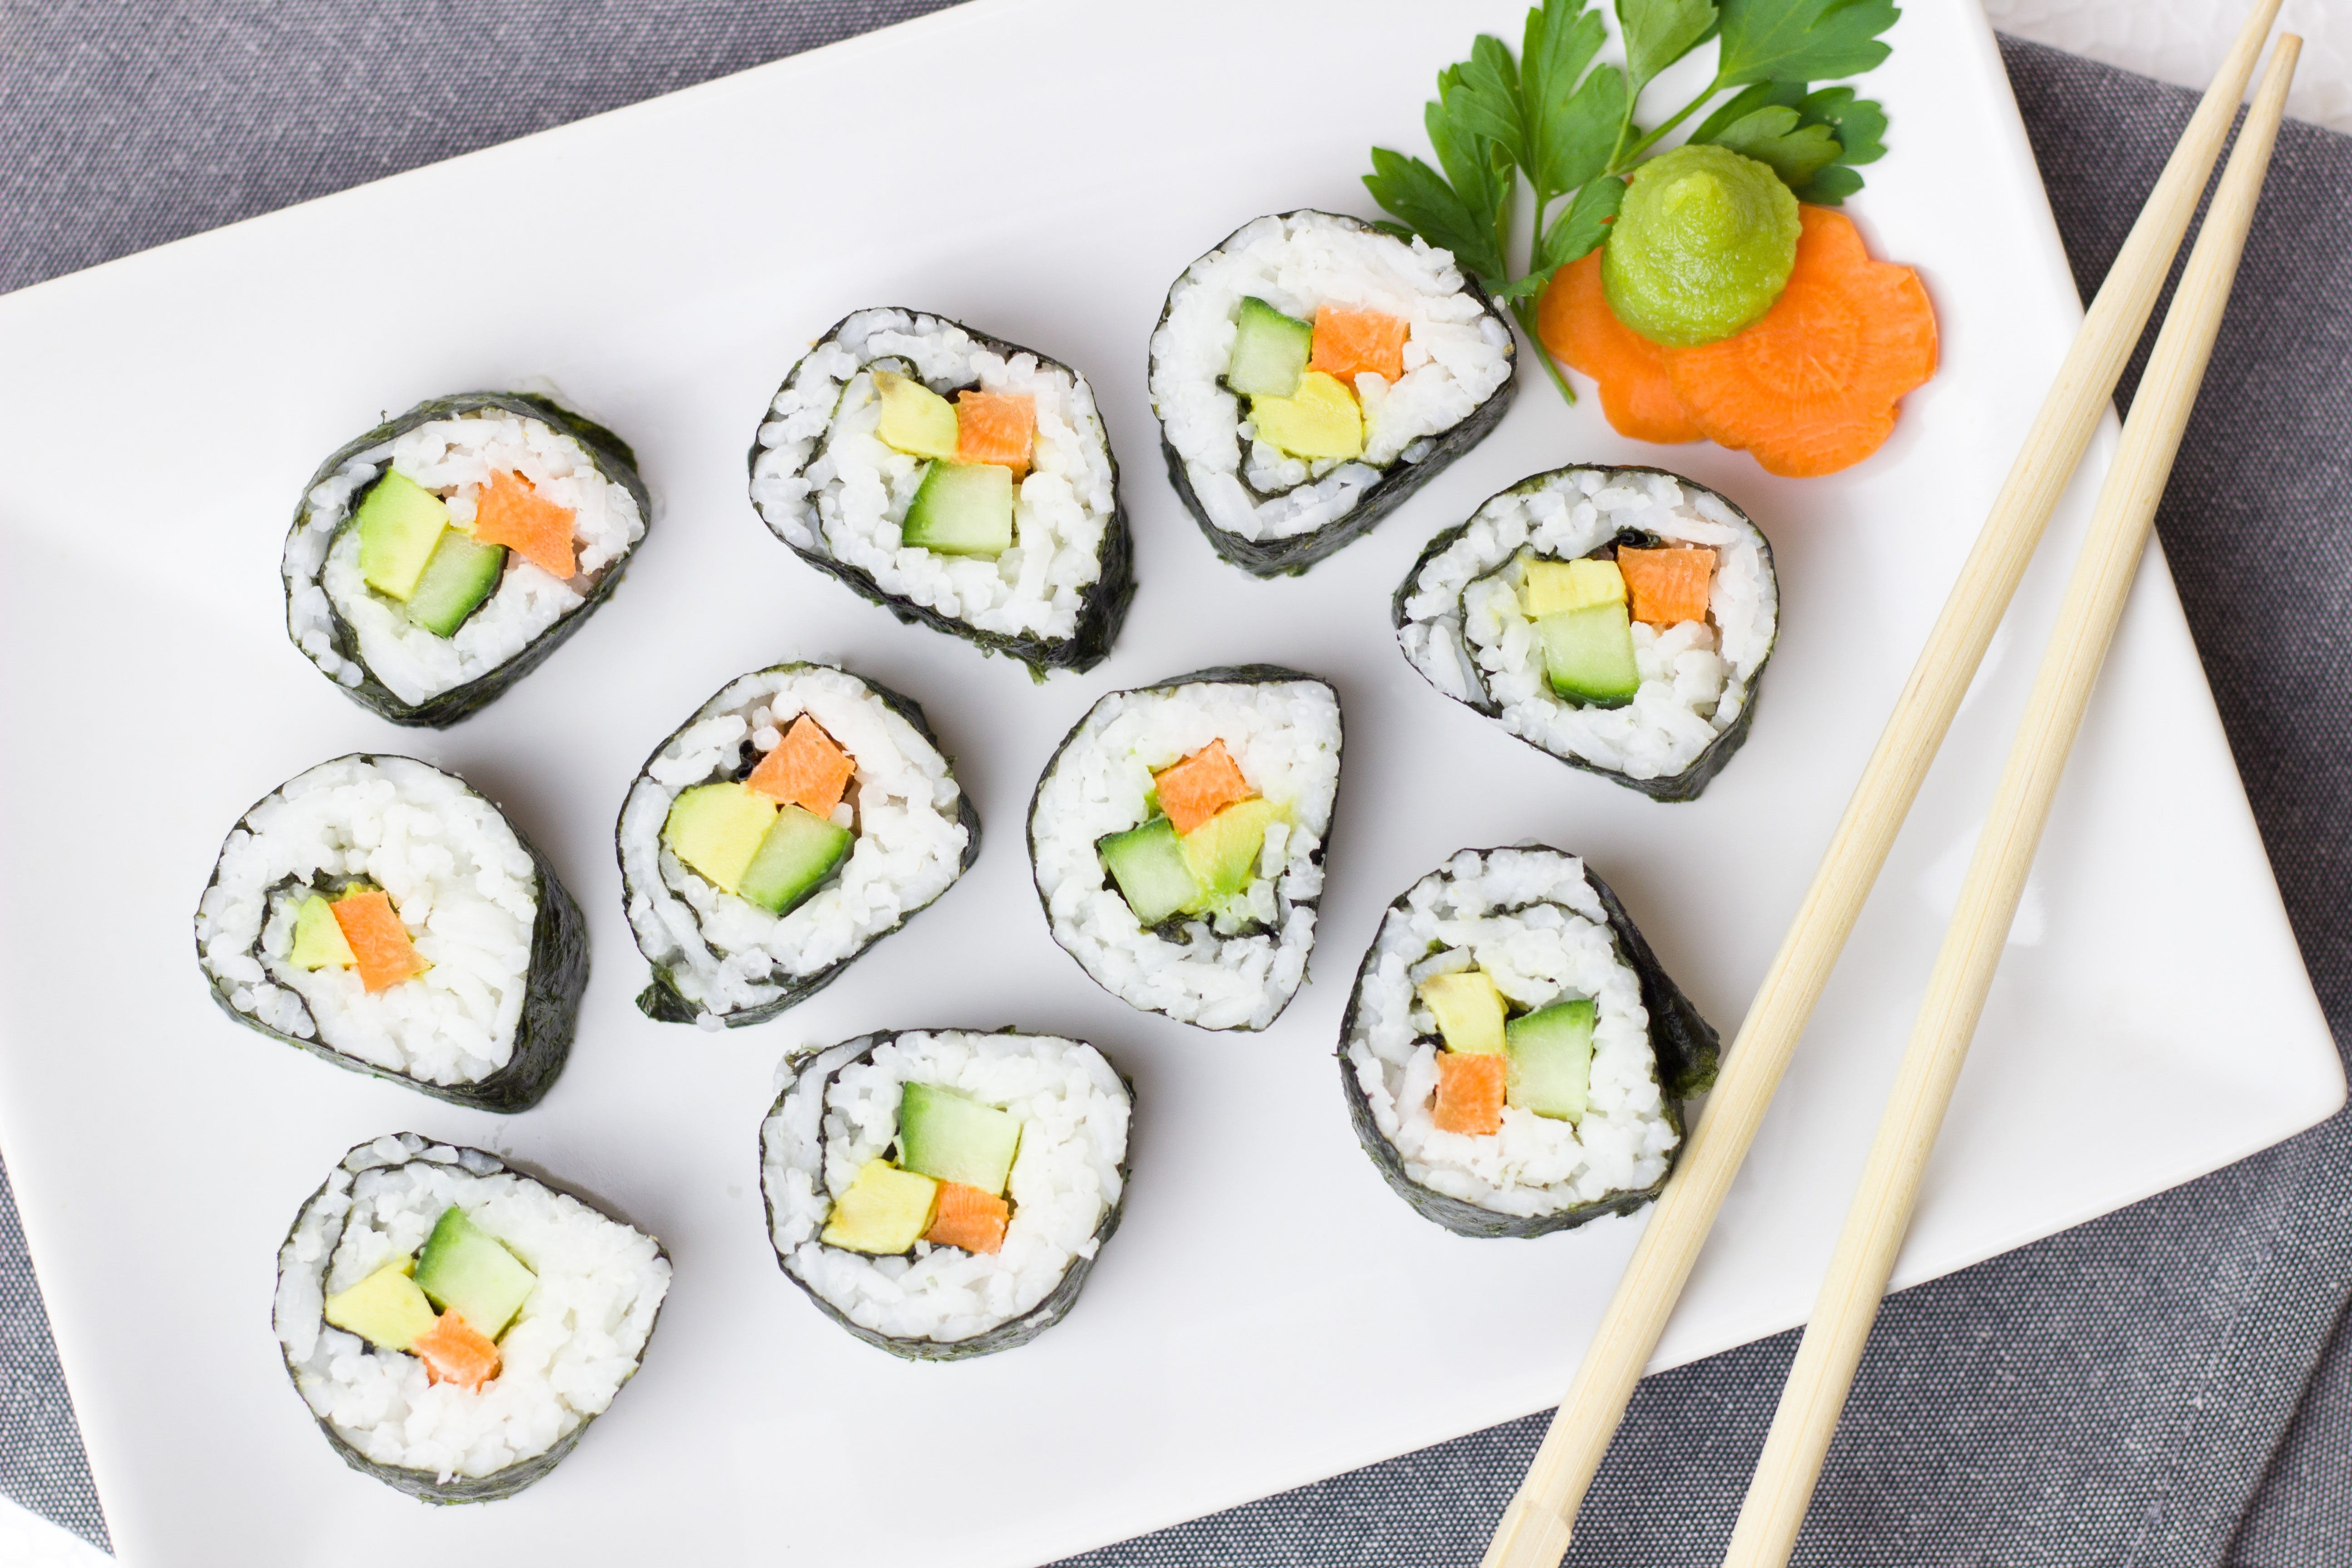 Sushi, Aslinya Bukan Asal Jepang?